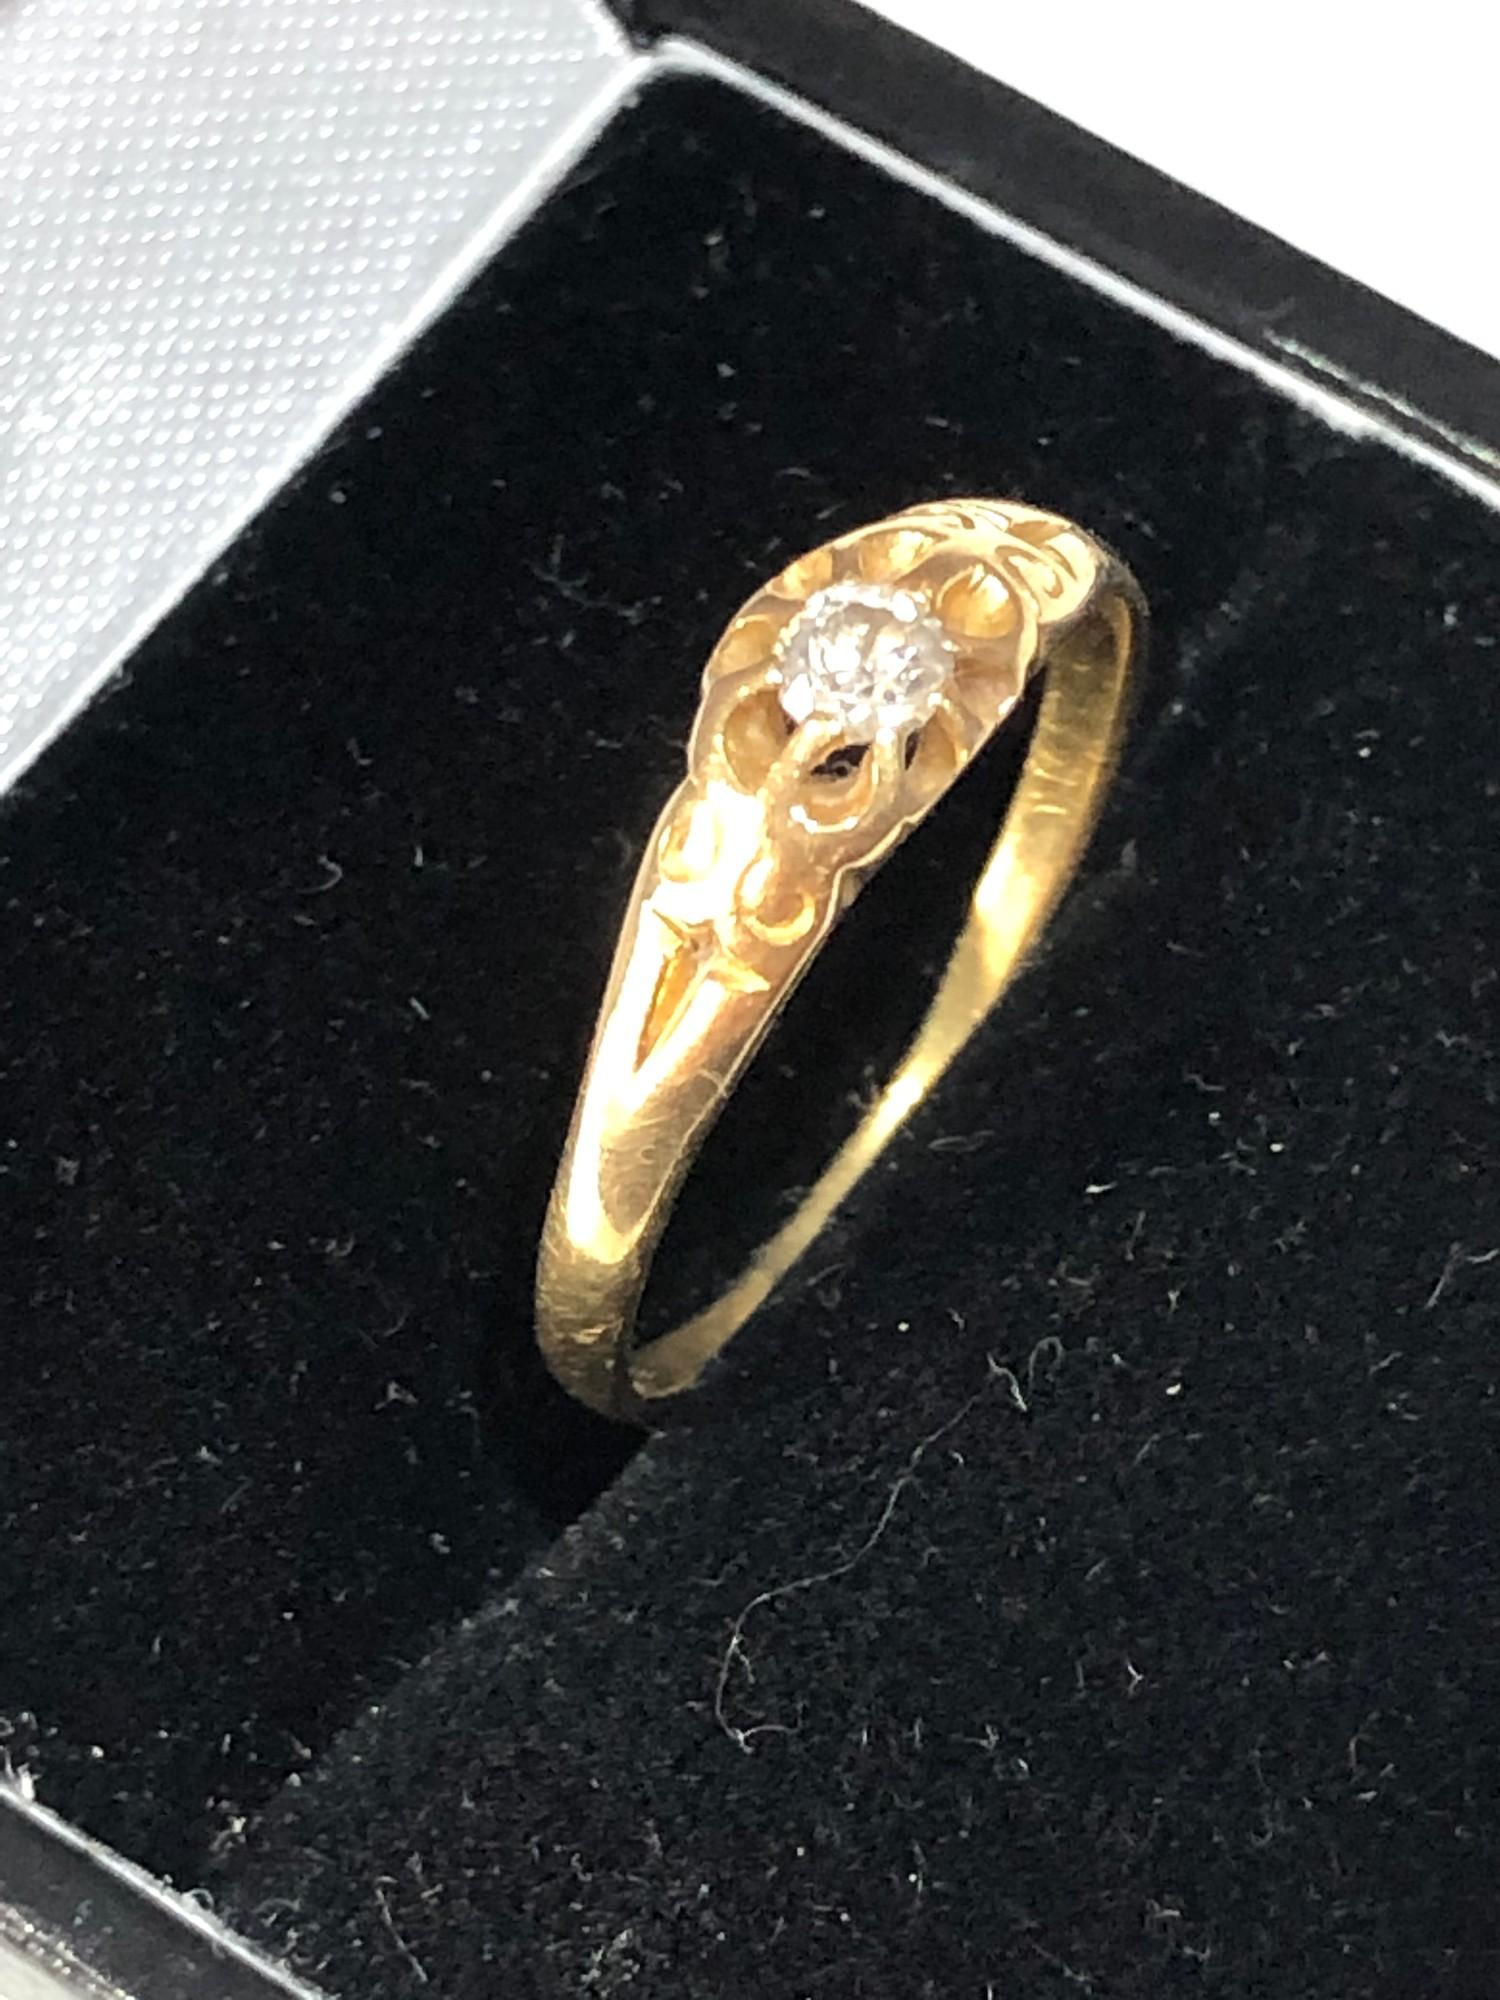 18ct gold diamond ring 2.6g - Image 2 of 3